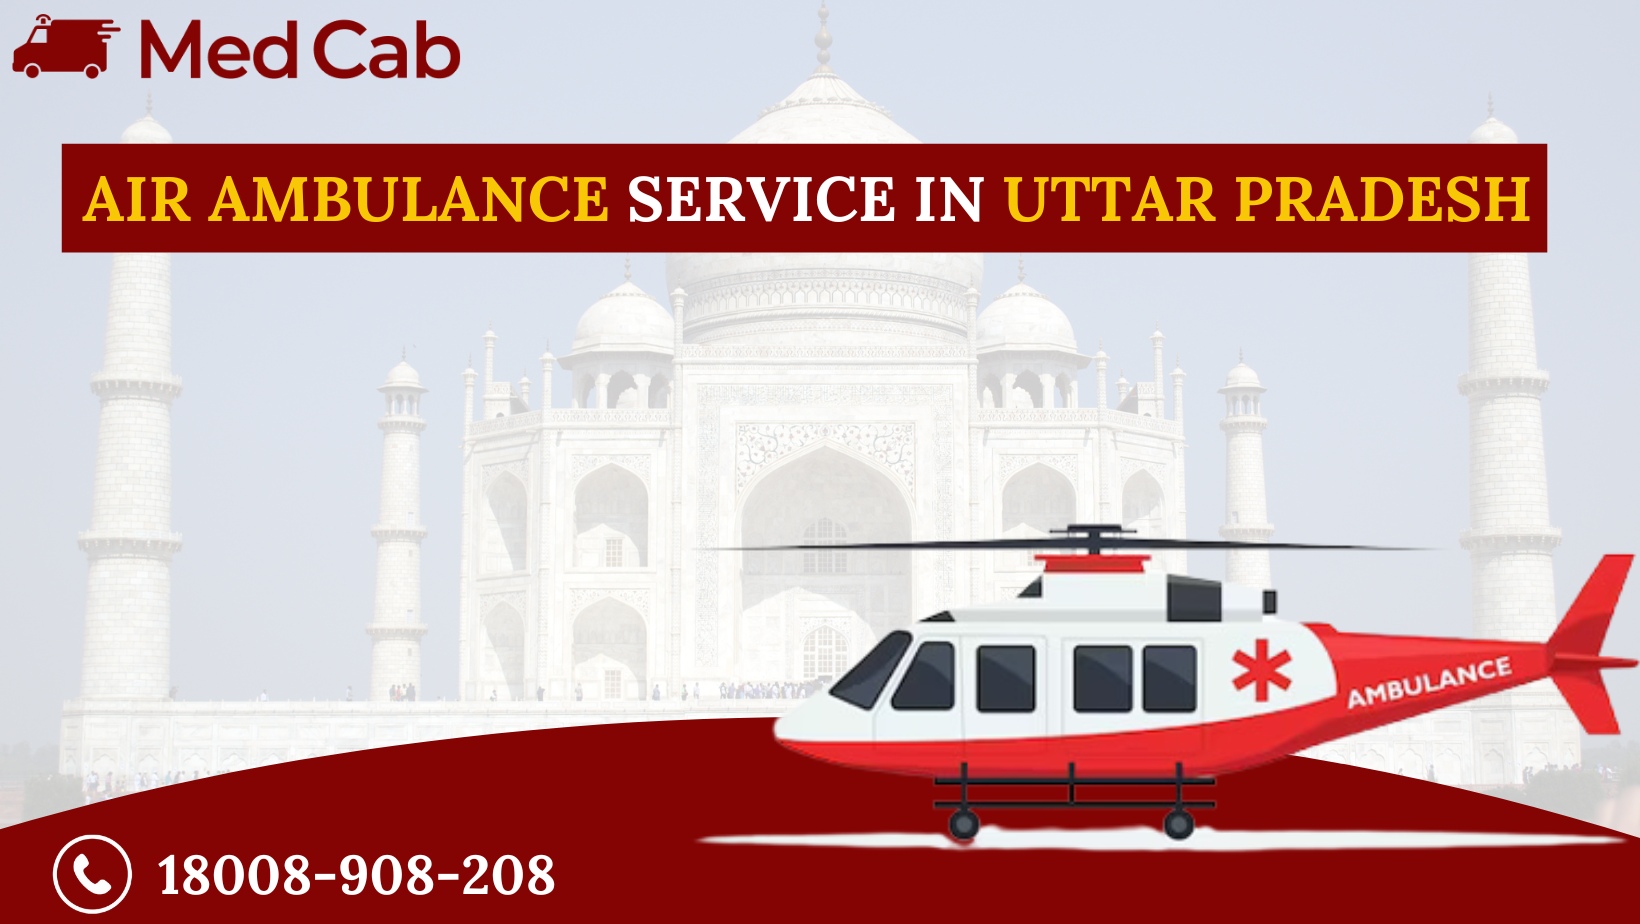 A Sky Full of Hope: MedCab's Air Ambulance Service in Uttar Pradesh